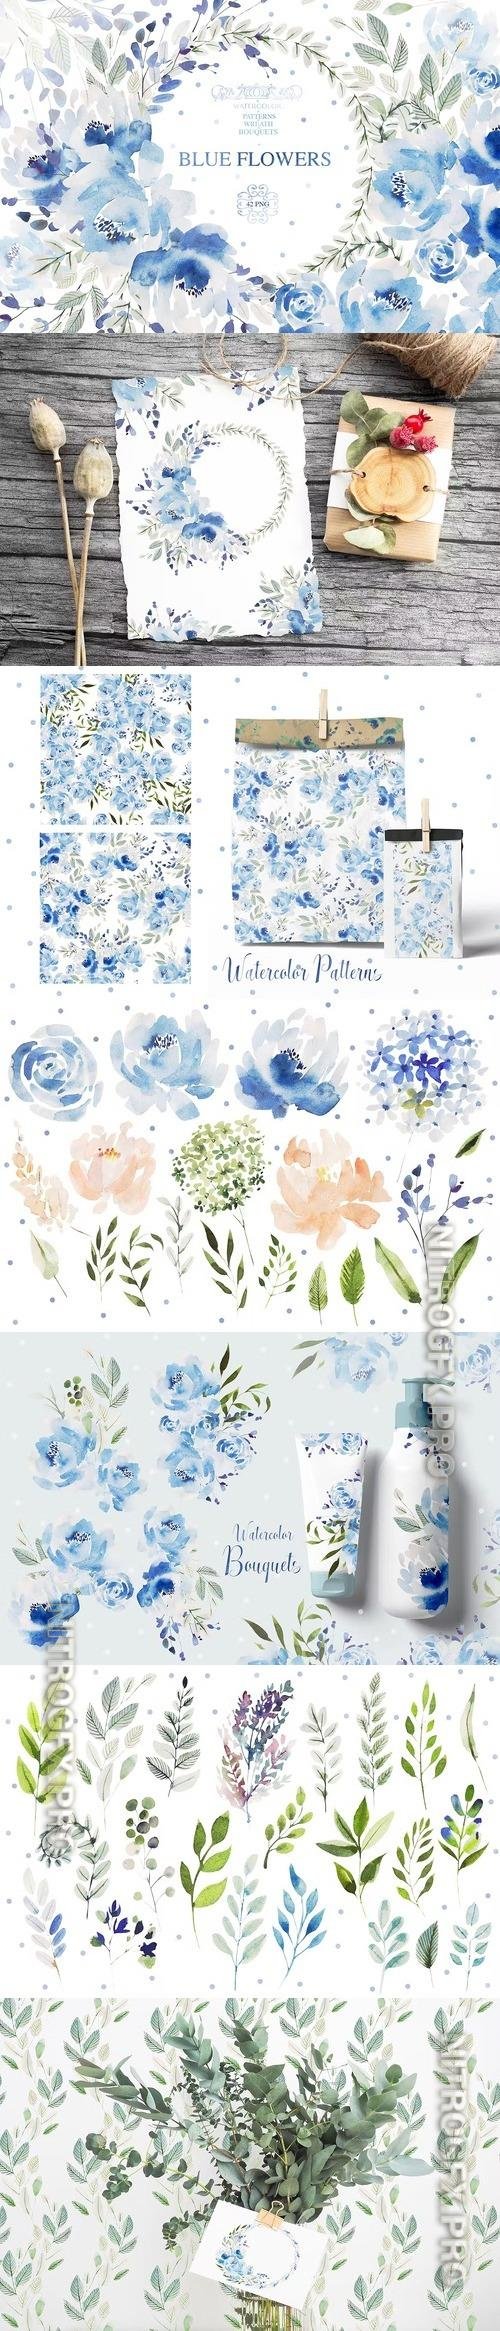 Watercolor BLUE FLOWERS